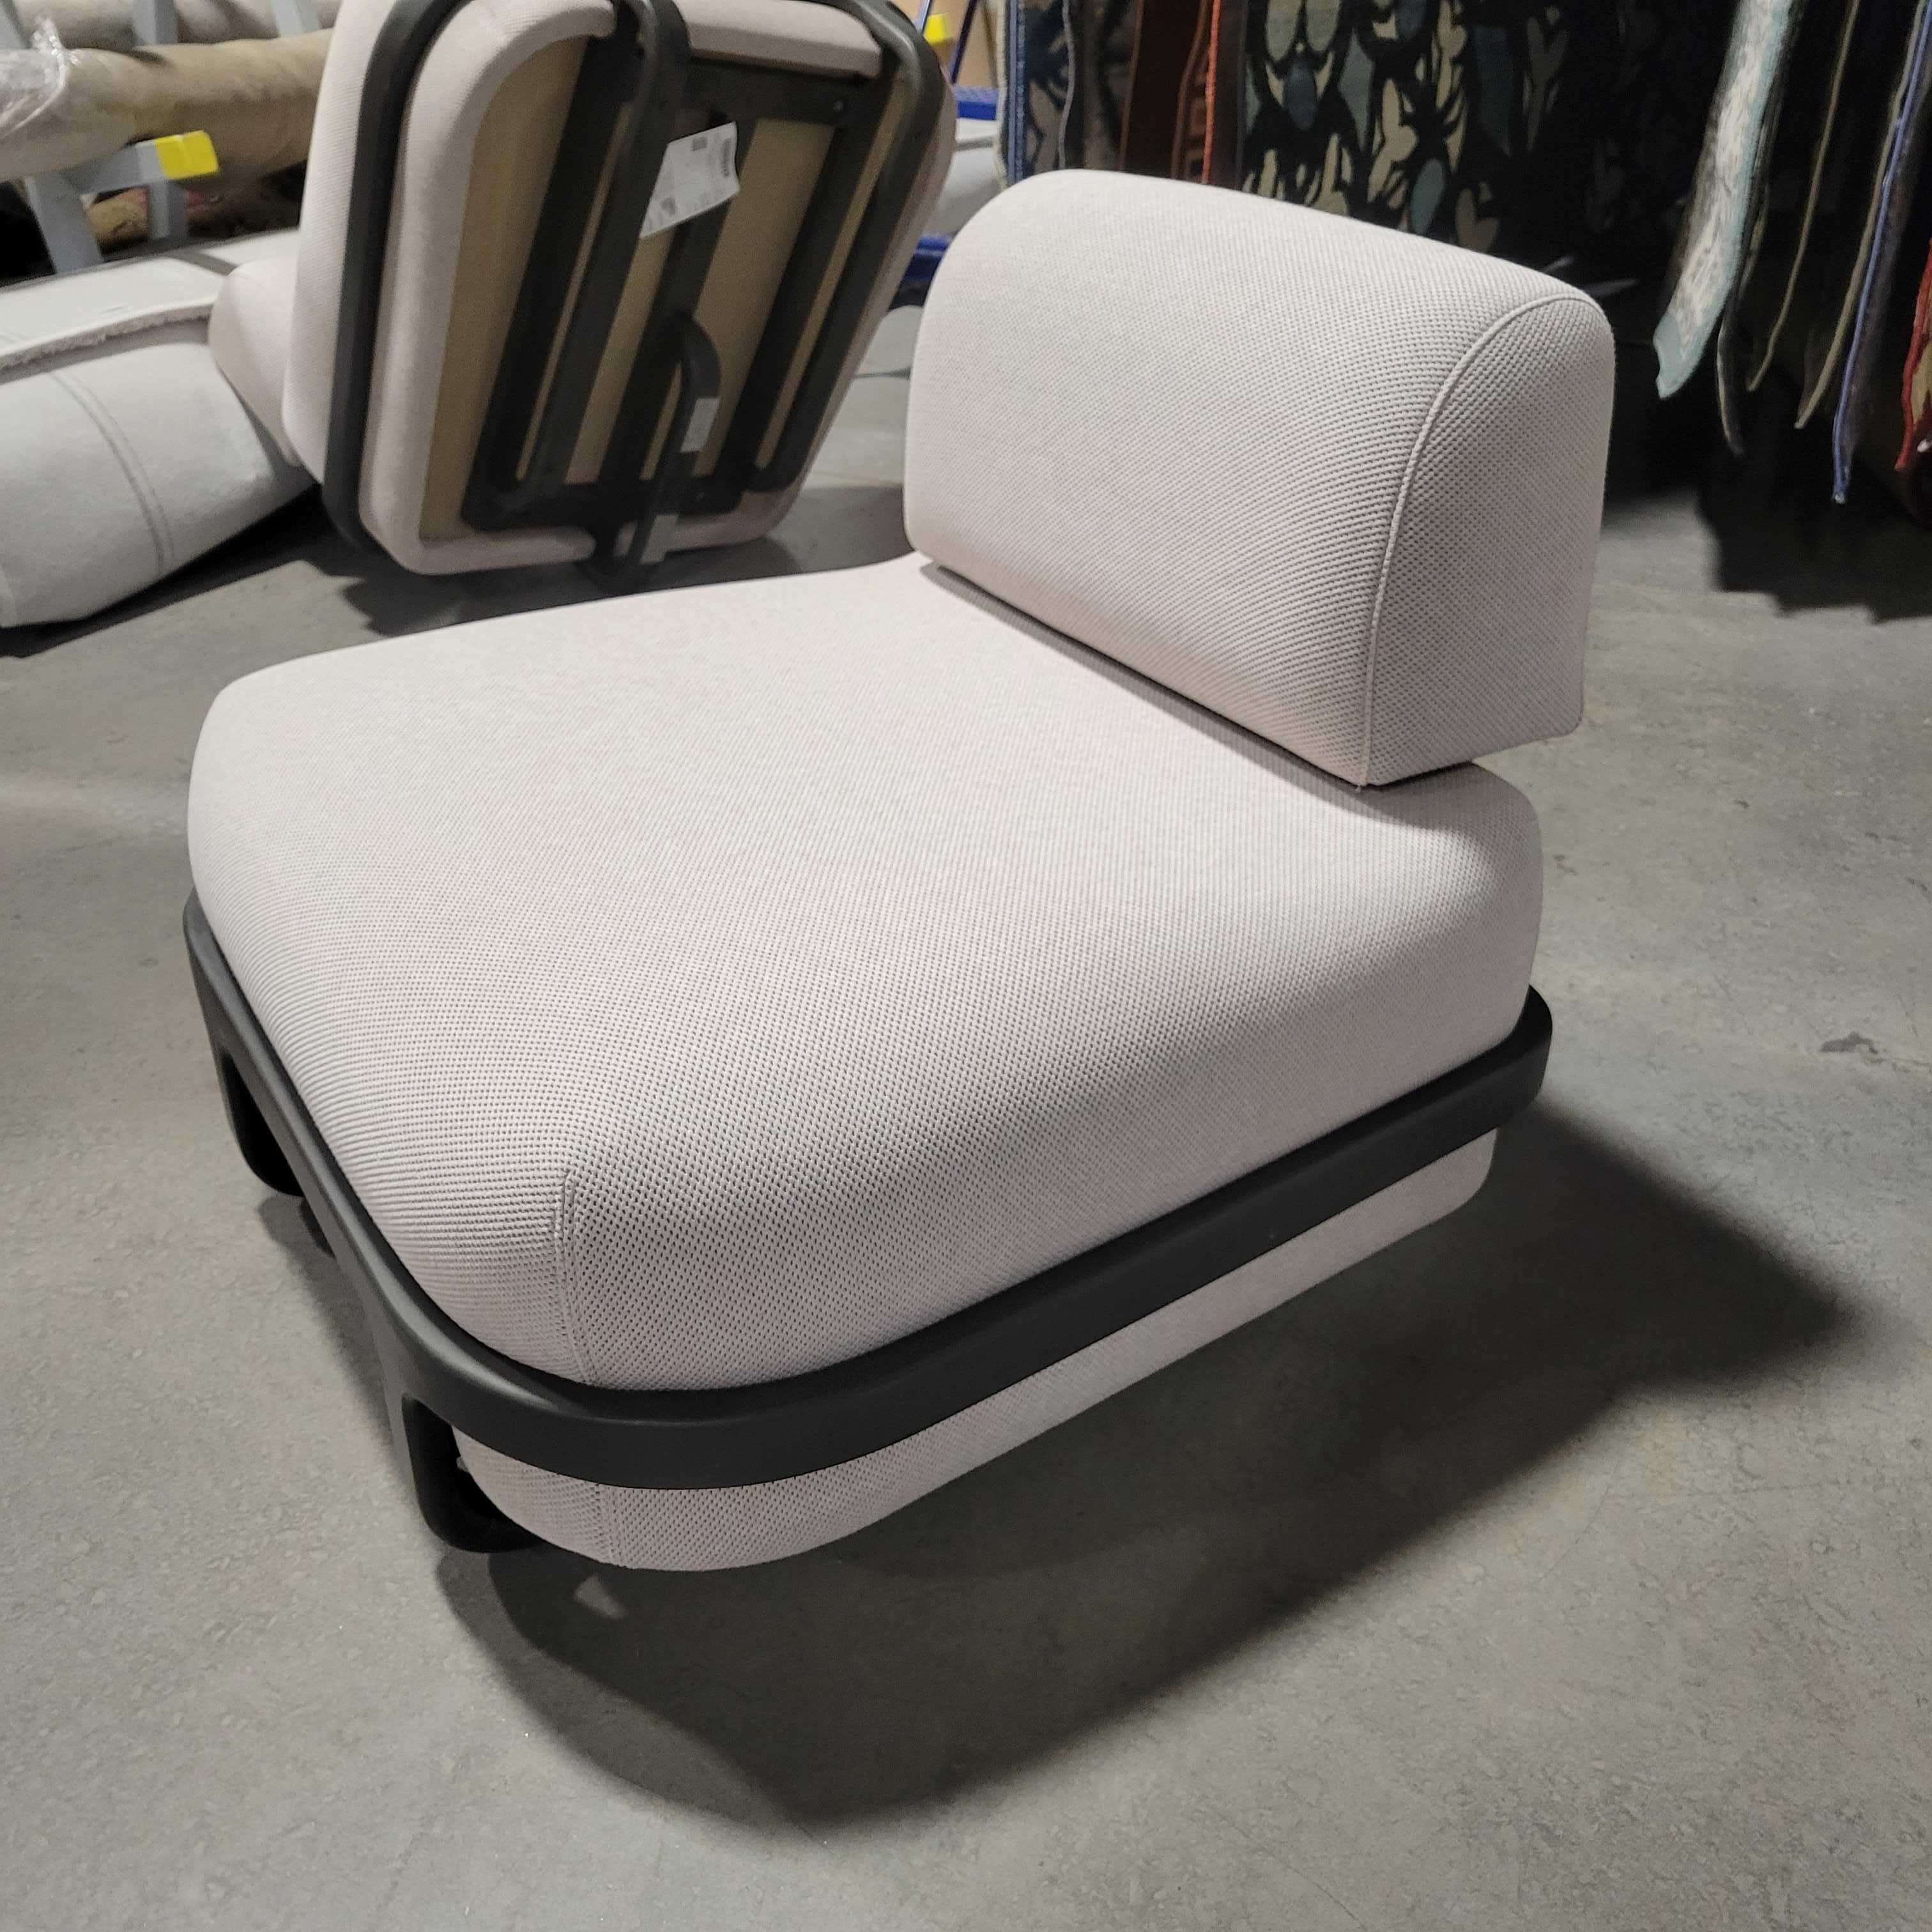 33"x 32"x 27" Poltrona Freijo Modern Lt. Grey & Charcoal Frame Chair